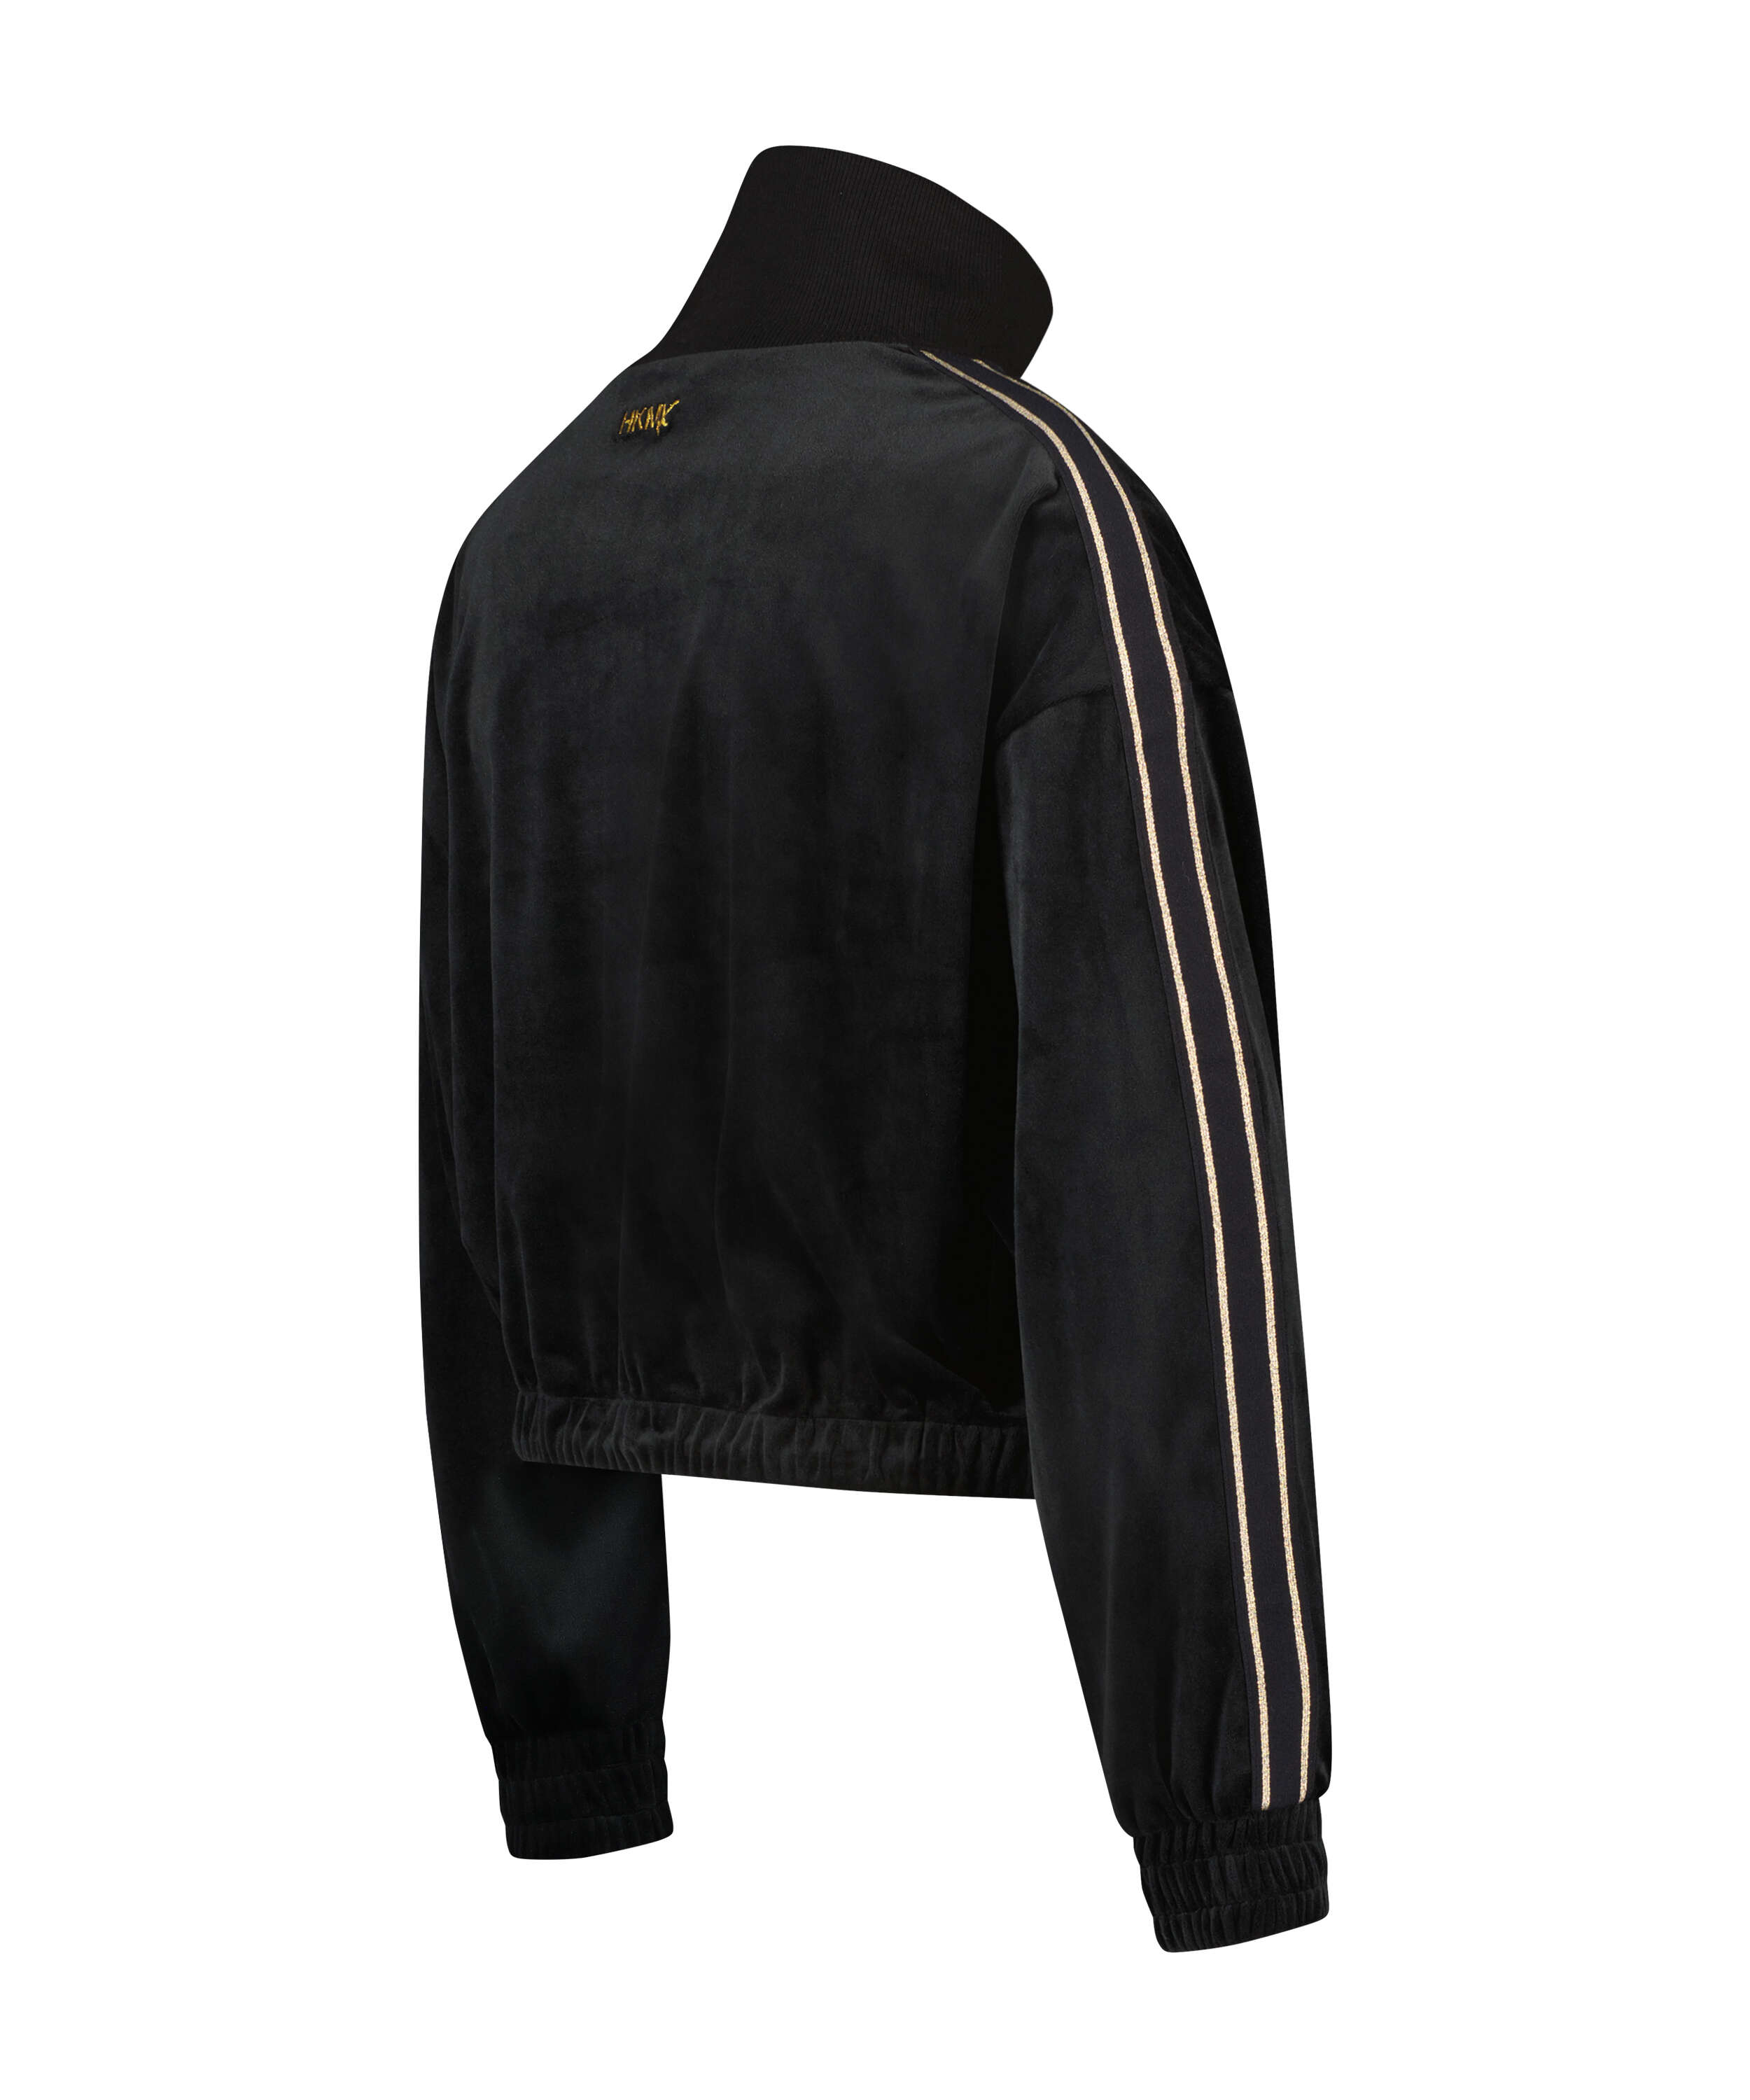 HKMX Sport jacket Velours, Black, main